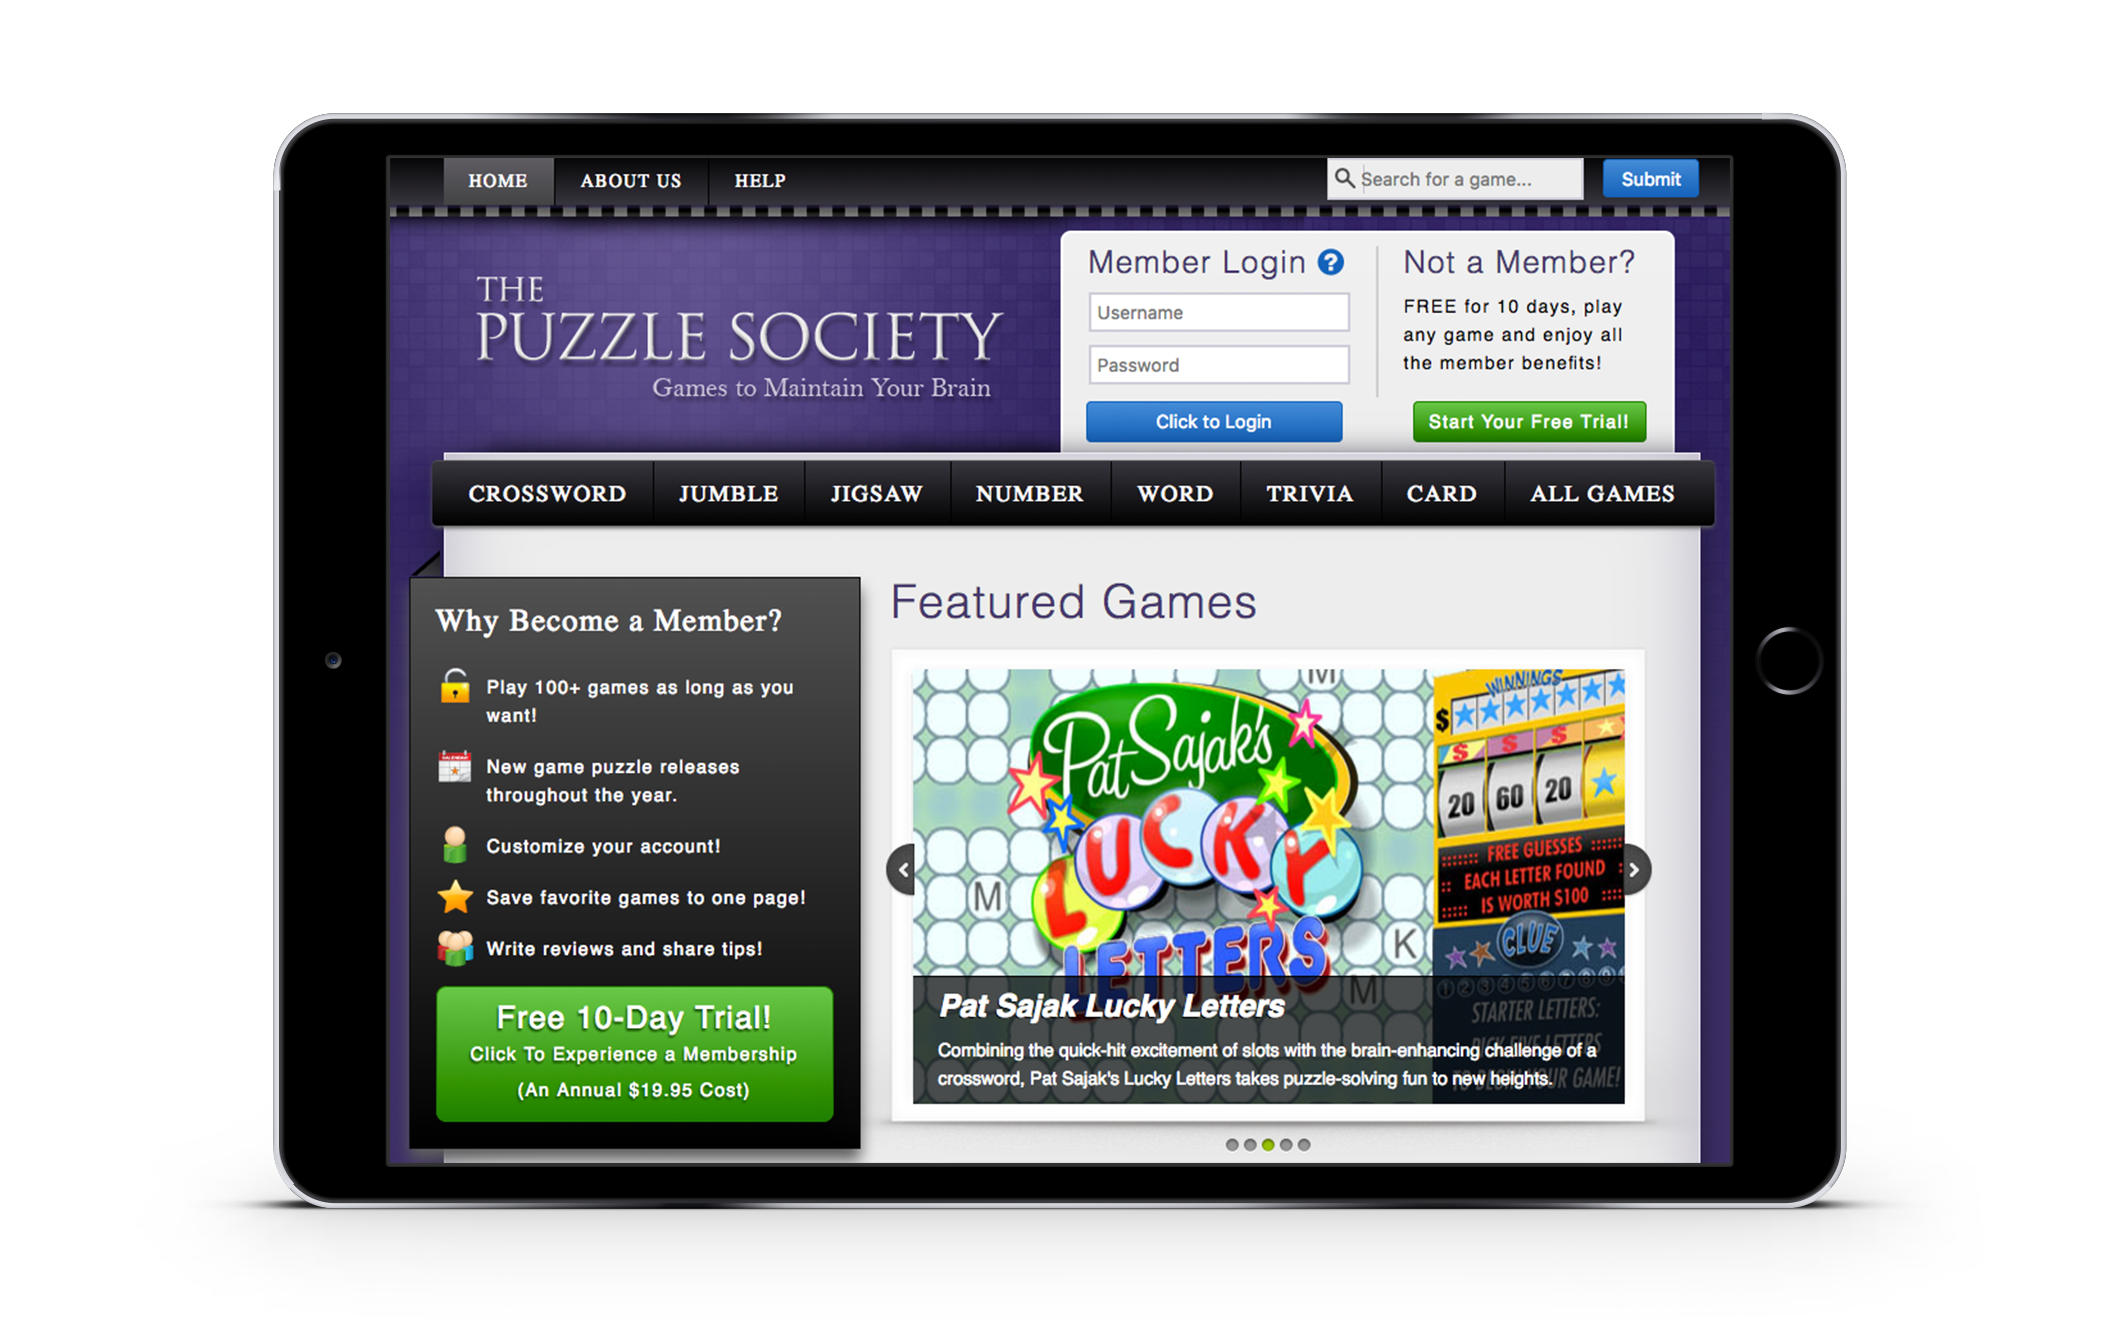 puzzlesociety.com loaded on an iPad